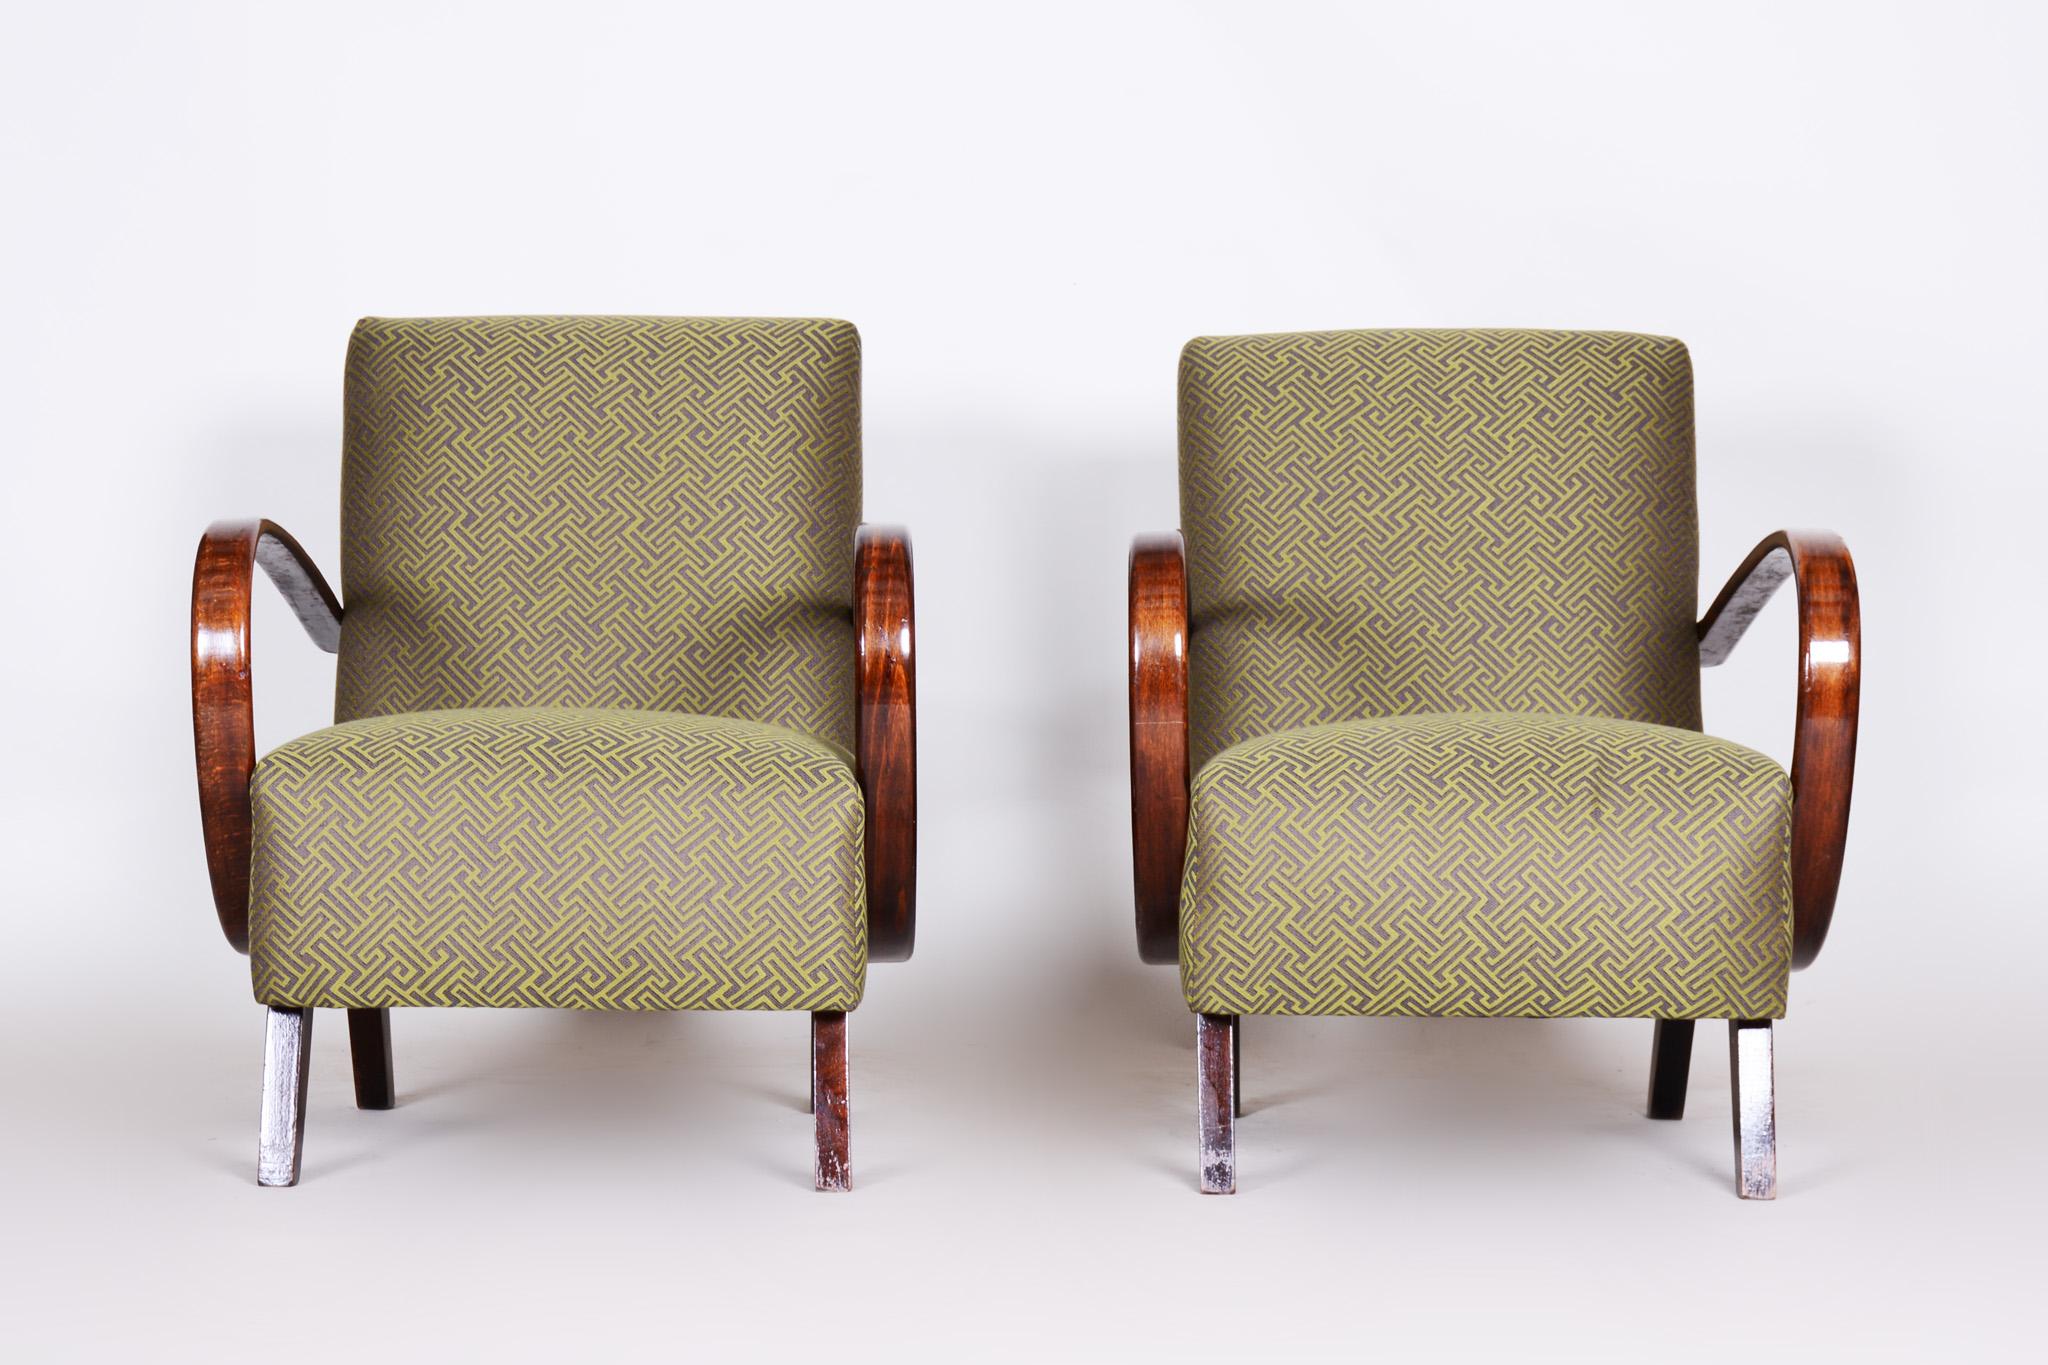 Pair of Art Deco armchairs

Source: Czechia (Czechrepublic)
Period: 1930-1939.
Material: Beech
Architect: Jindrich Halabala (UP Zavody Maker)

Original well preserved wood condition. New upholstery fabric.